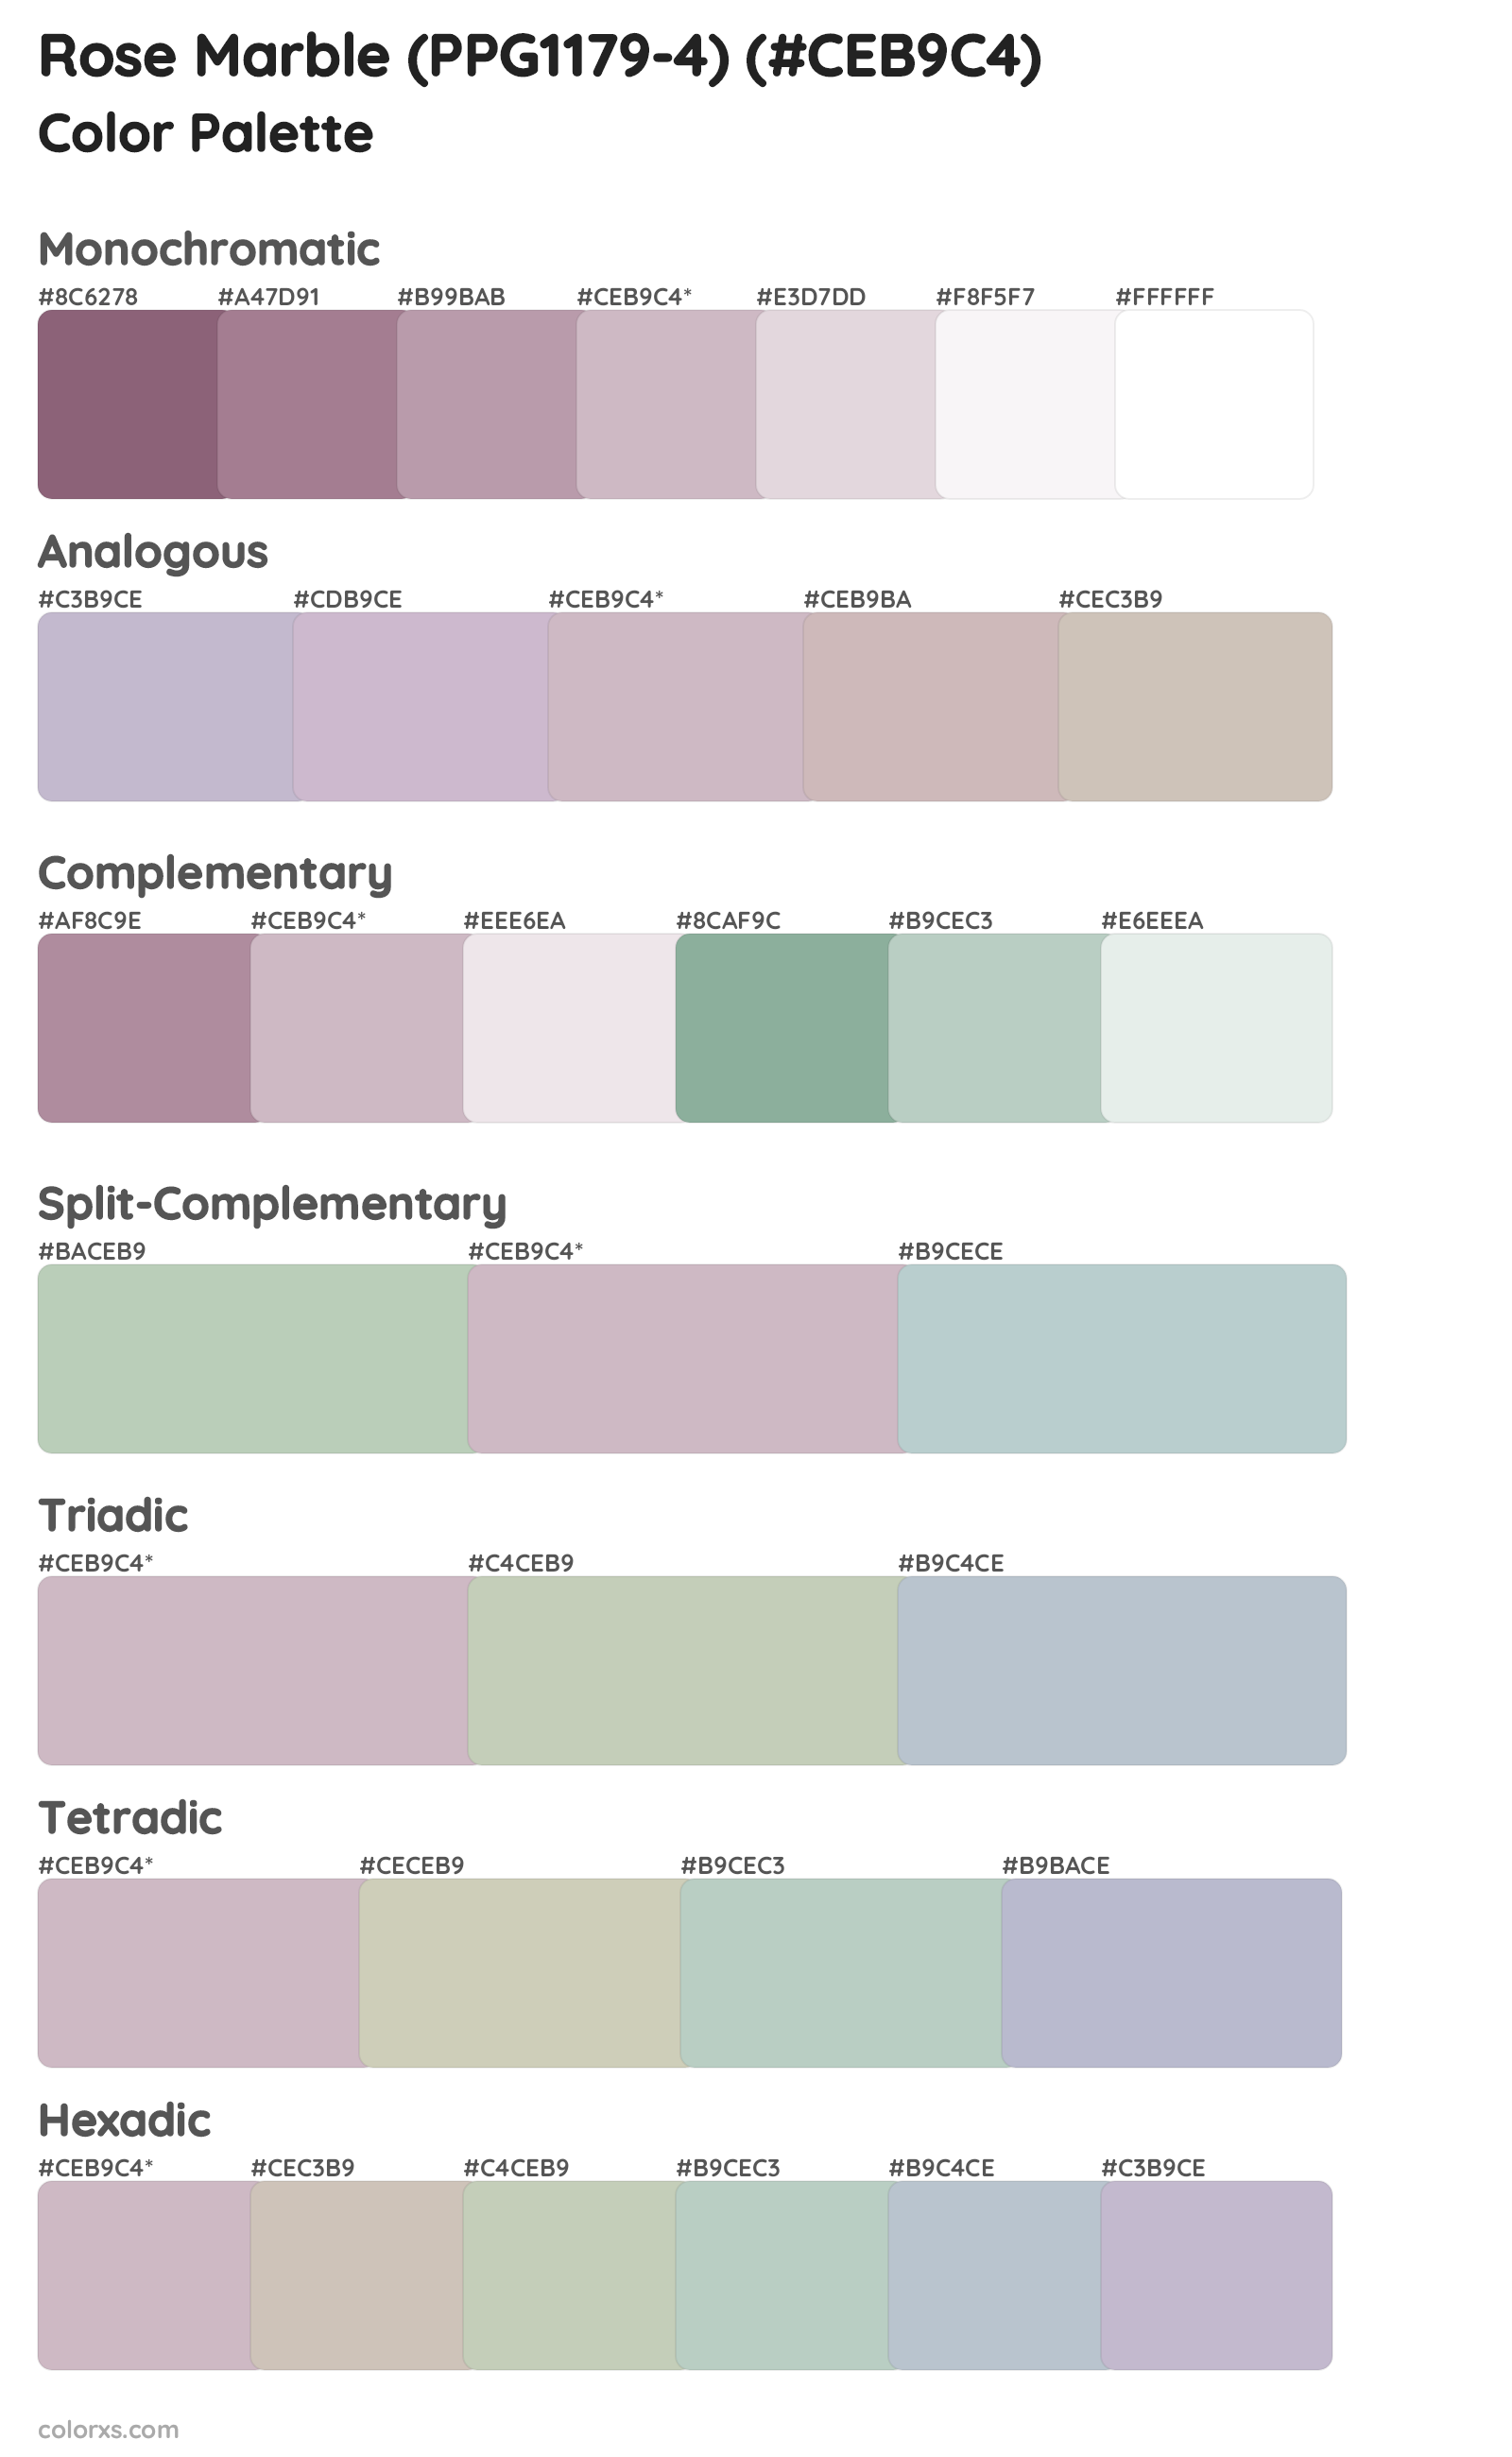 Rose Marble (PPG1179-4) Color Scheme Palettes